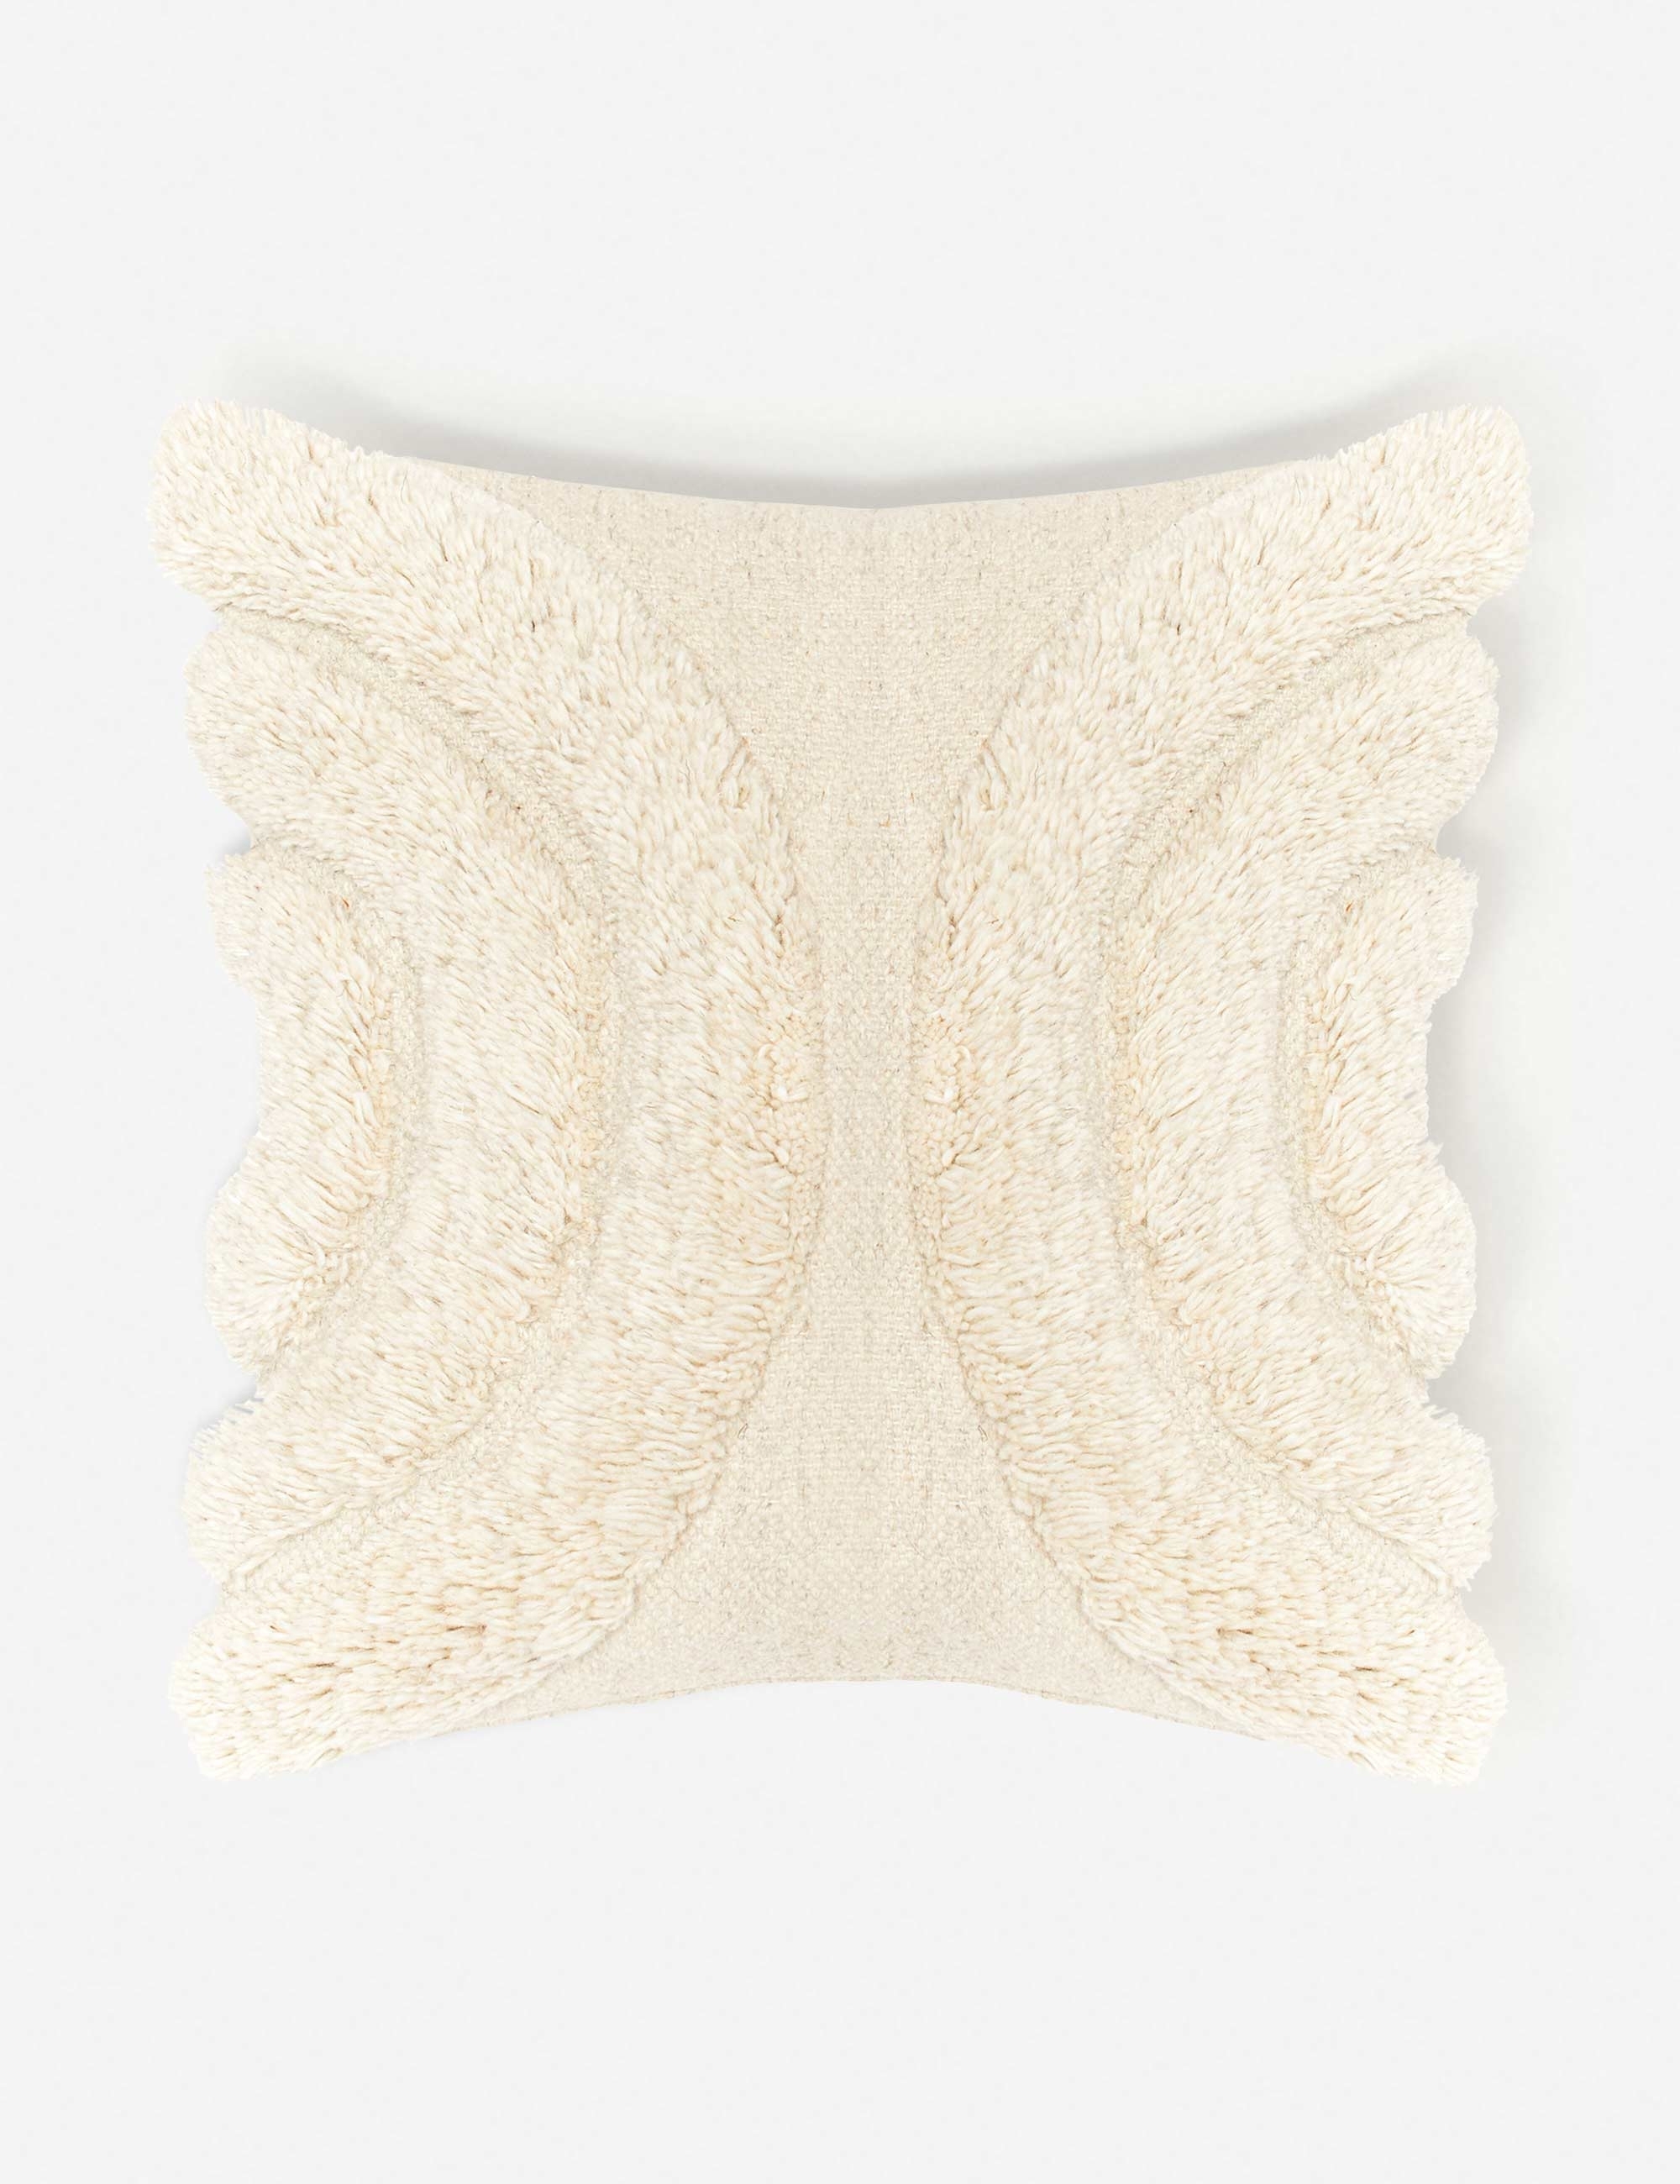 Arches Pillow, Natural By Sarah Sherman Samuel - Image 0